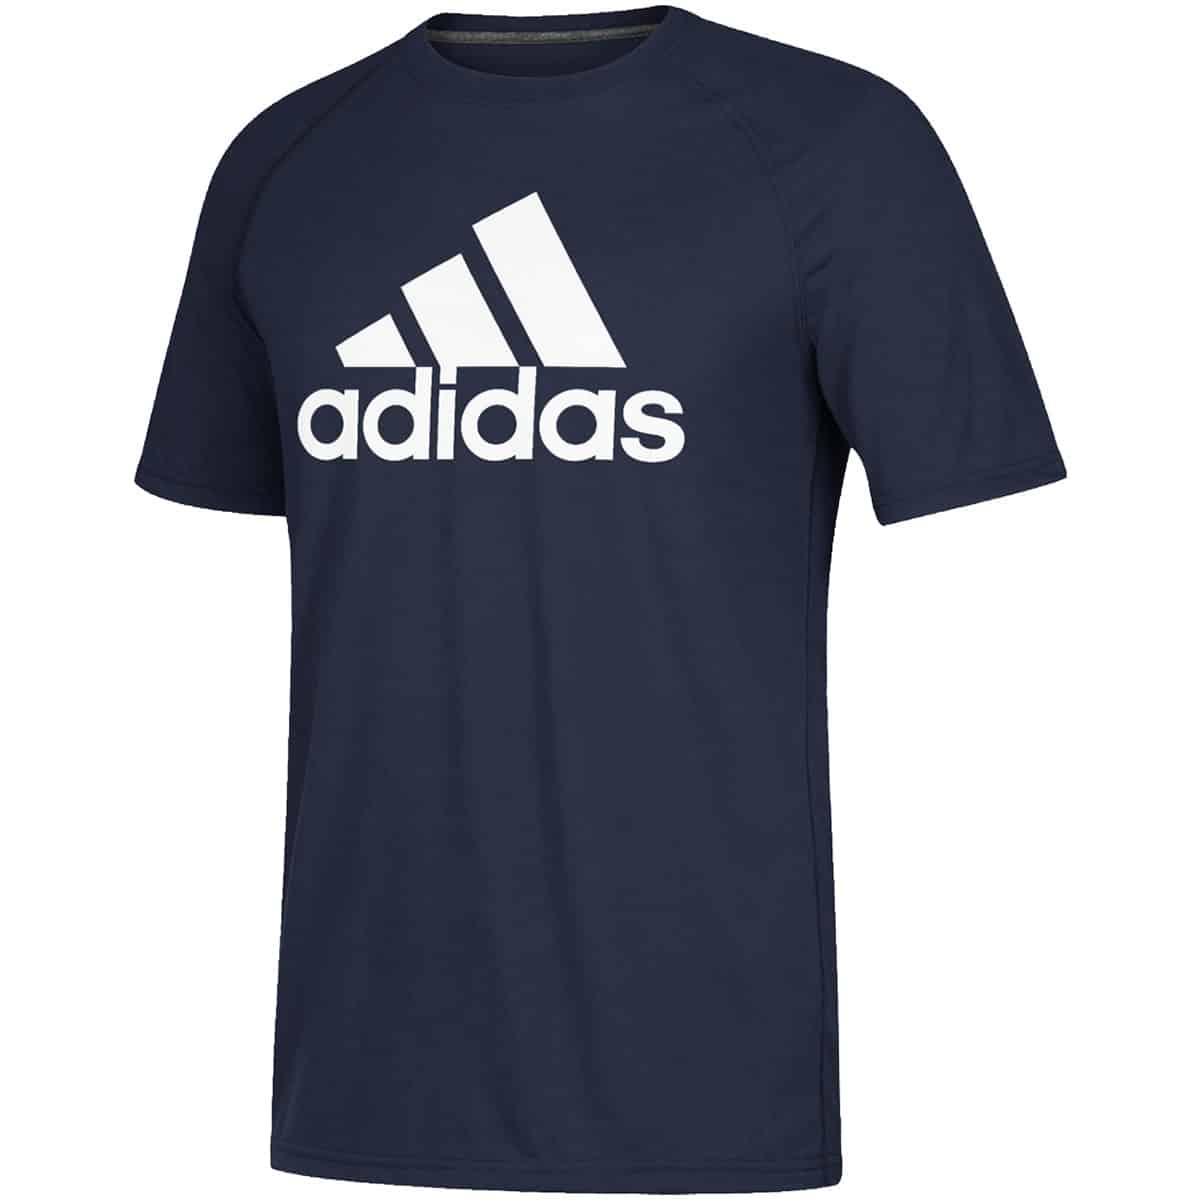 Men's Adidas Ultimate Navy T-Shirt Tee - Detroit Game Gear